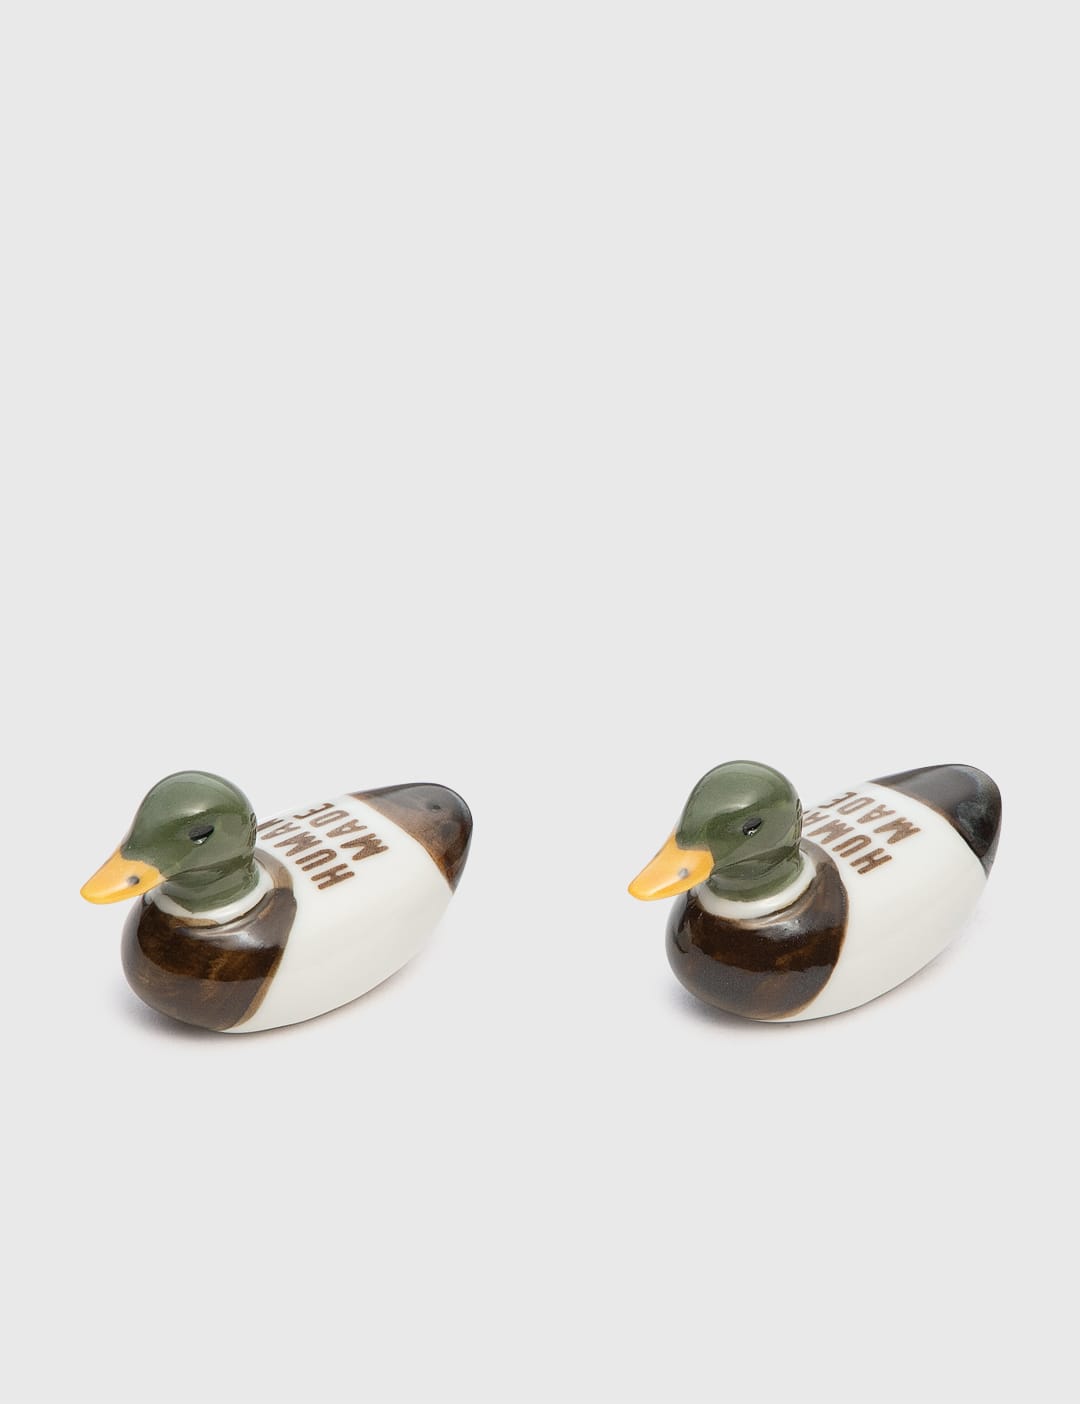 Human Made - Duck Chopstick Rest (Set of 2) | HBX - HYPEBEAST 为您搜罗全球潮流时尚品牌